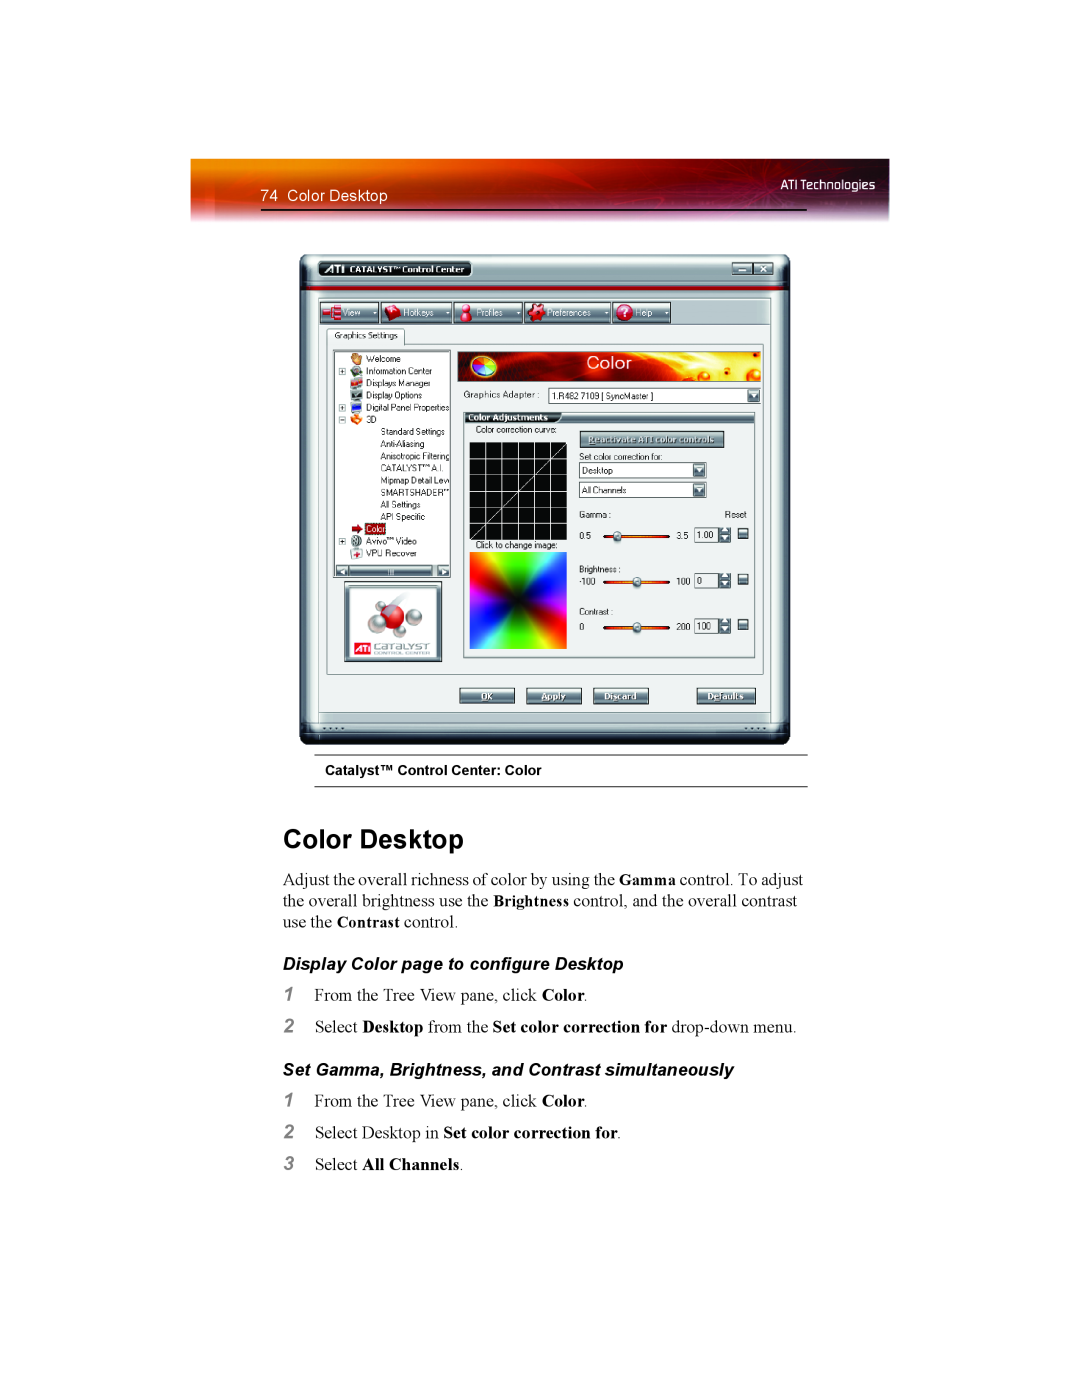 ATI Technologies X1550 SERIES manual Color Desktop, Display Color page to configure Desktop 